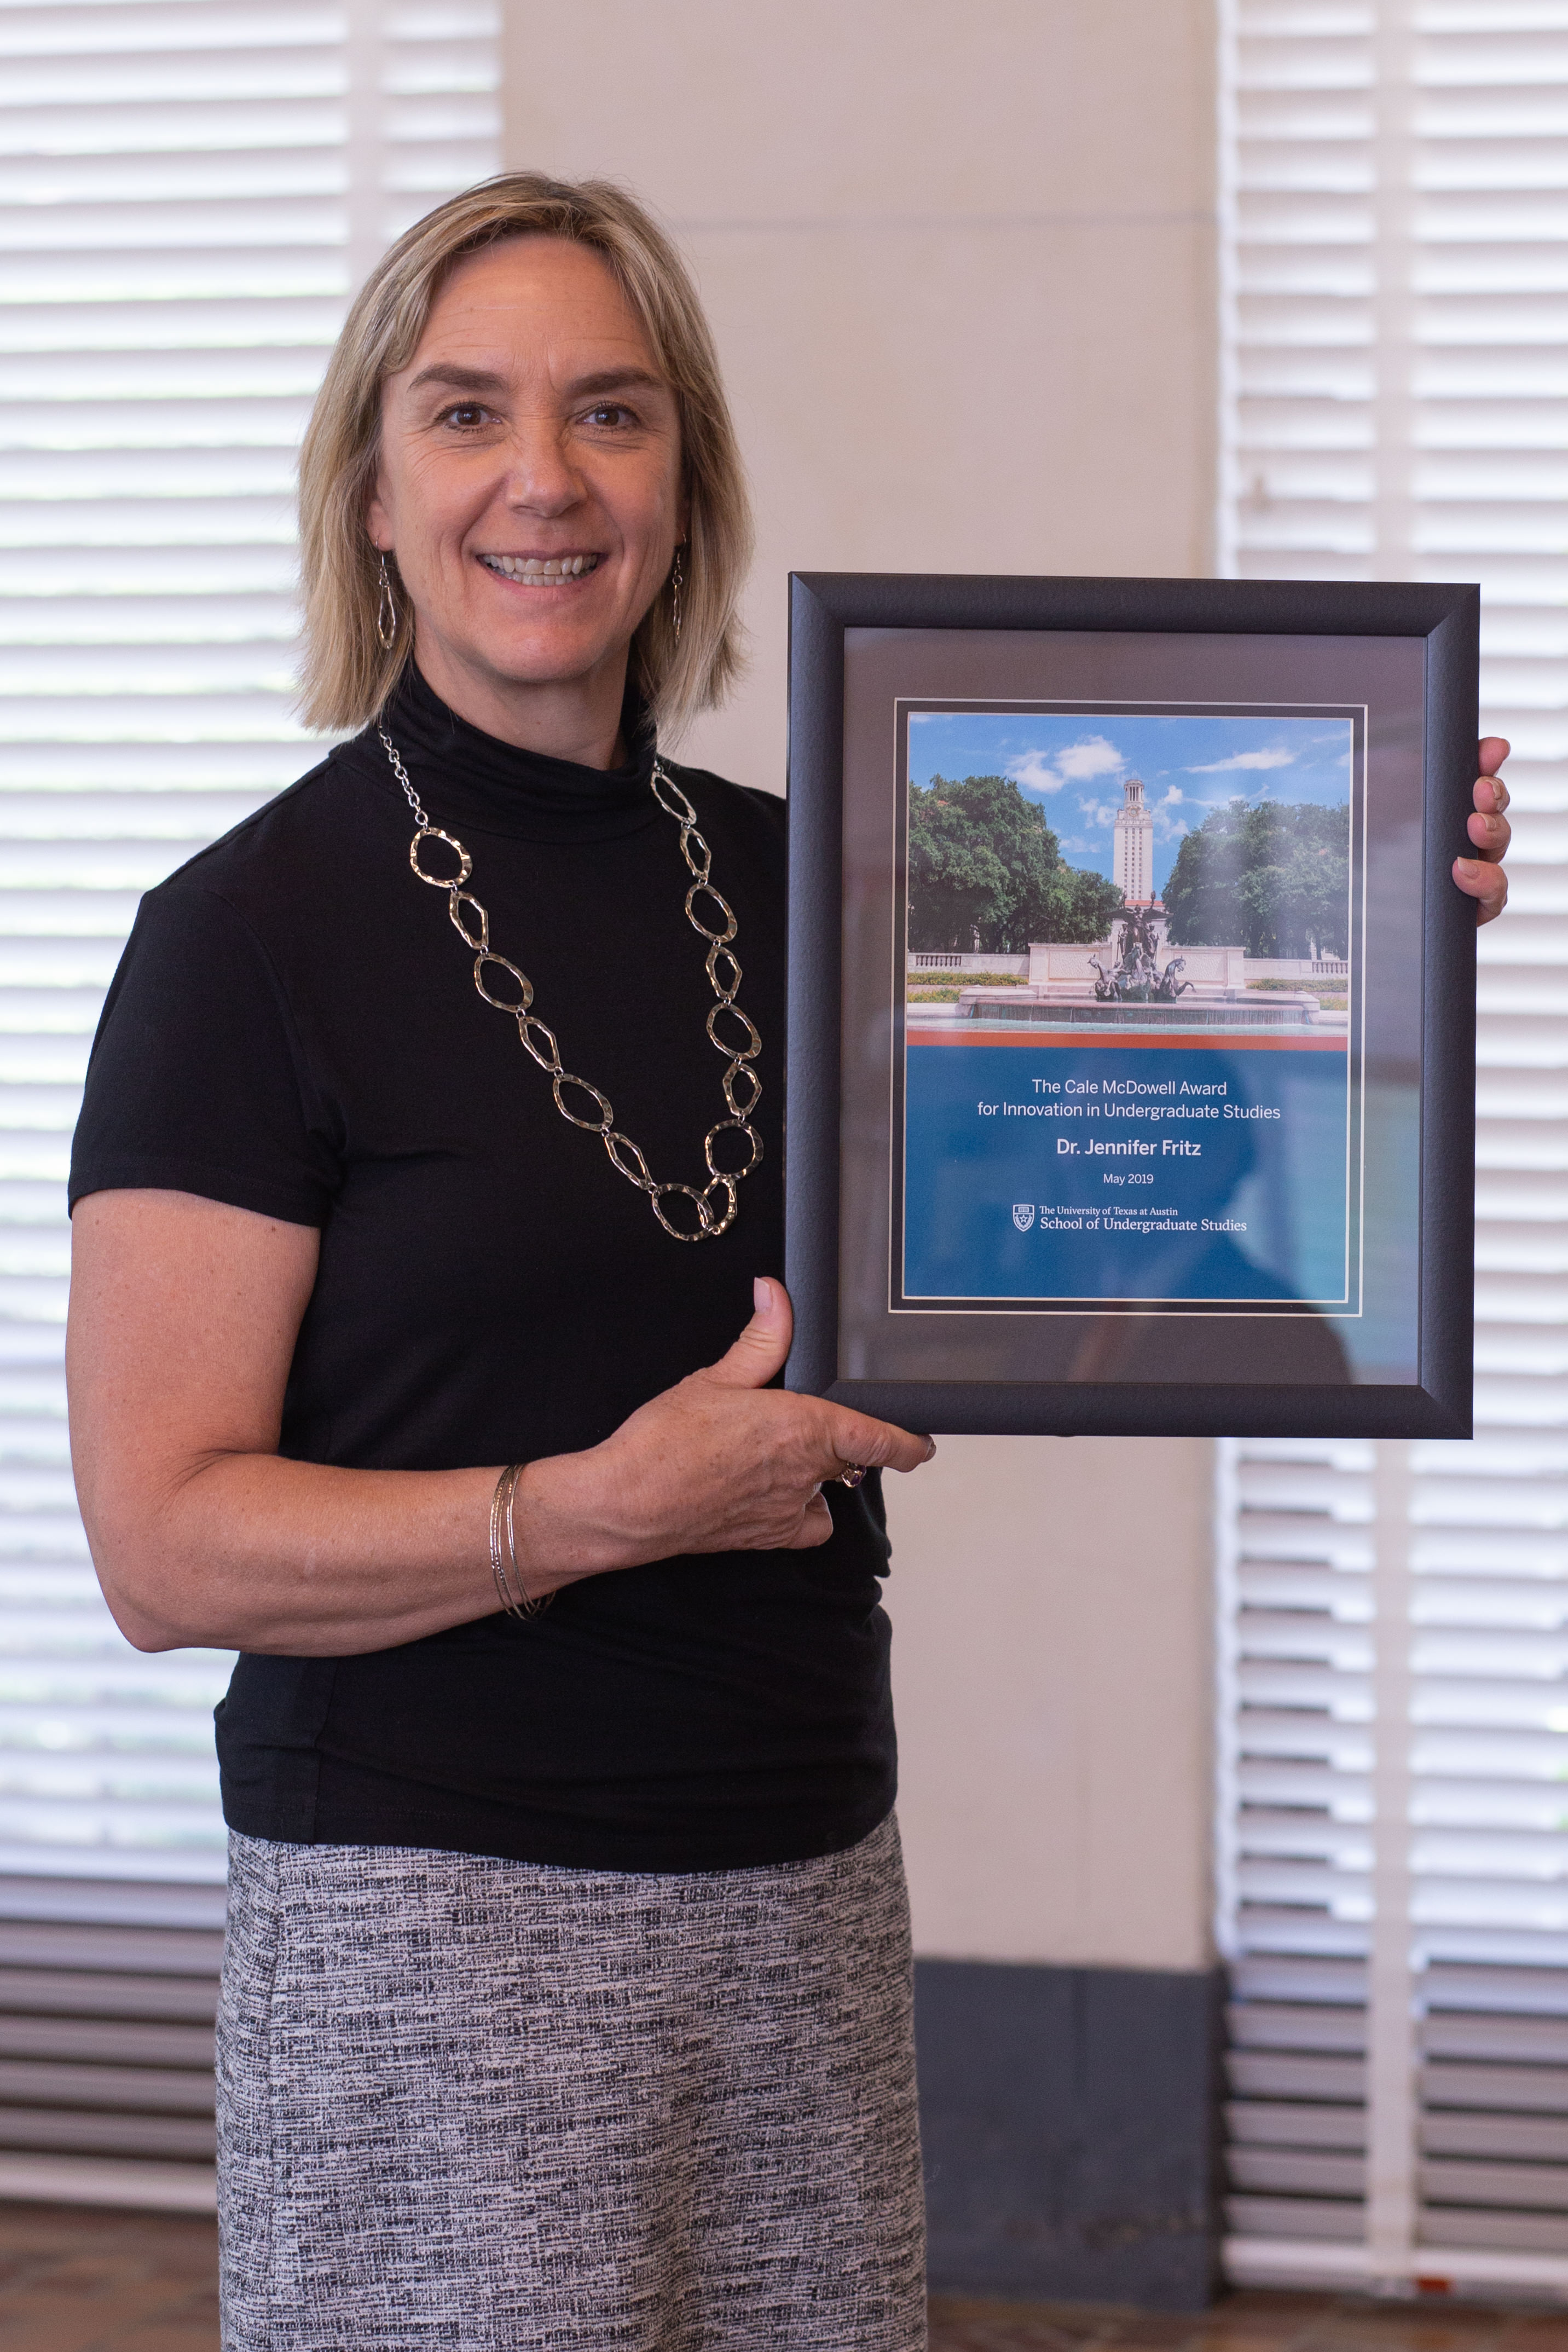 Dr. Jennifer Fritz with her award